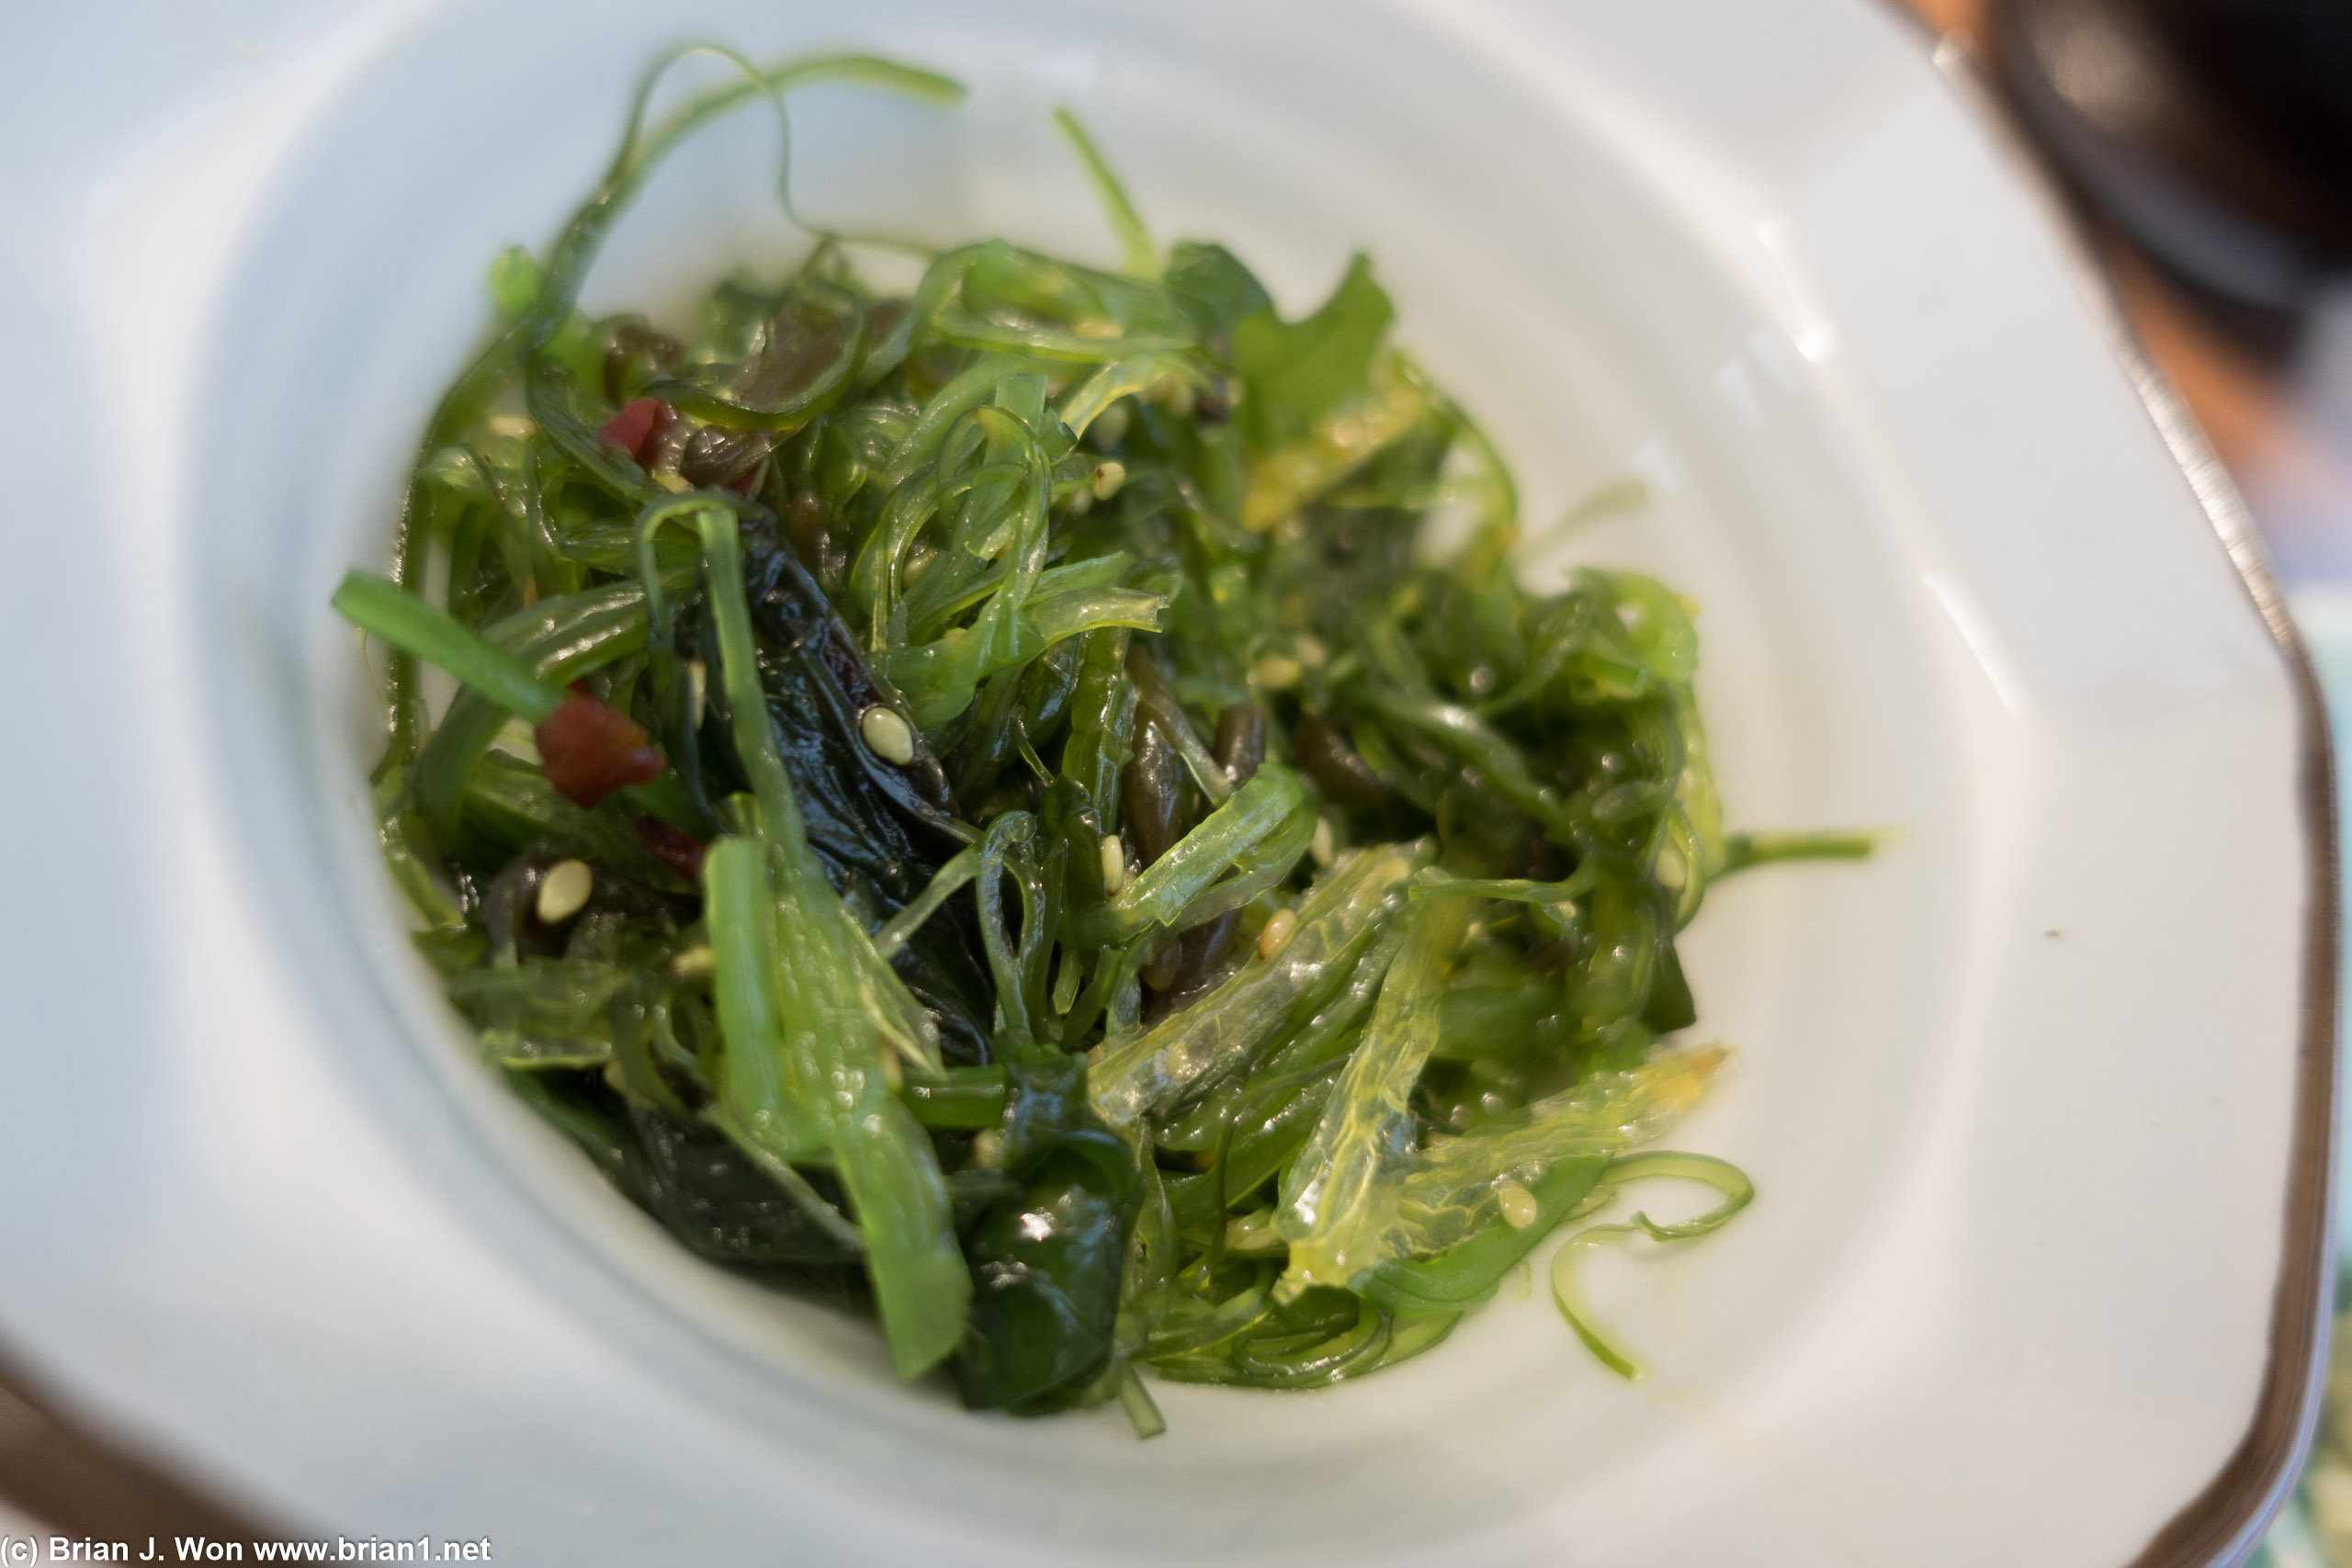 Seaweed salad was best described as not bad.